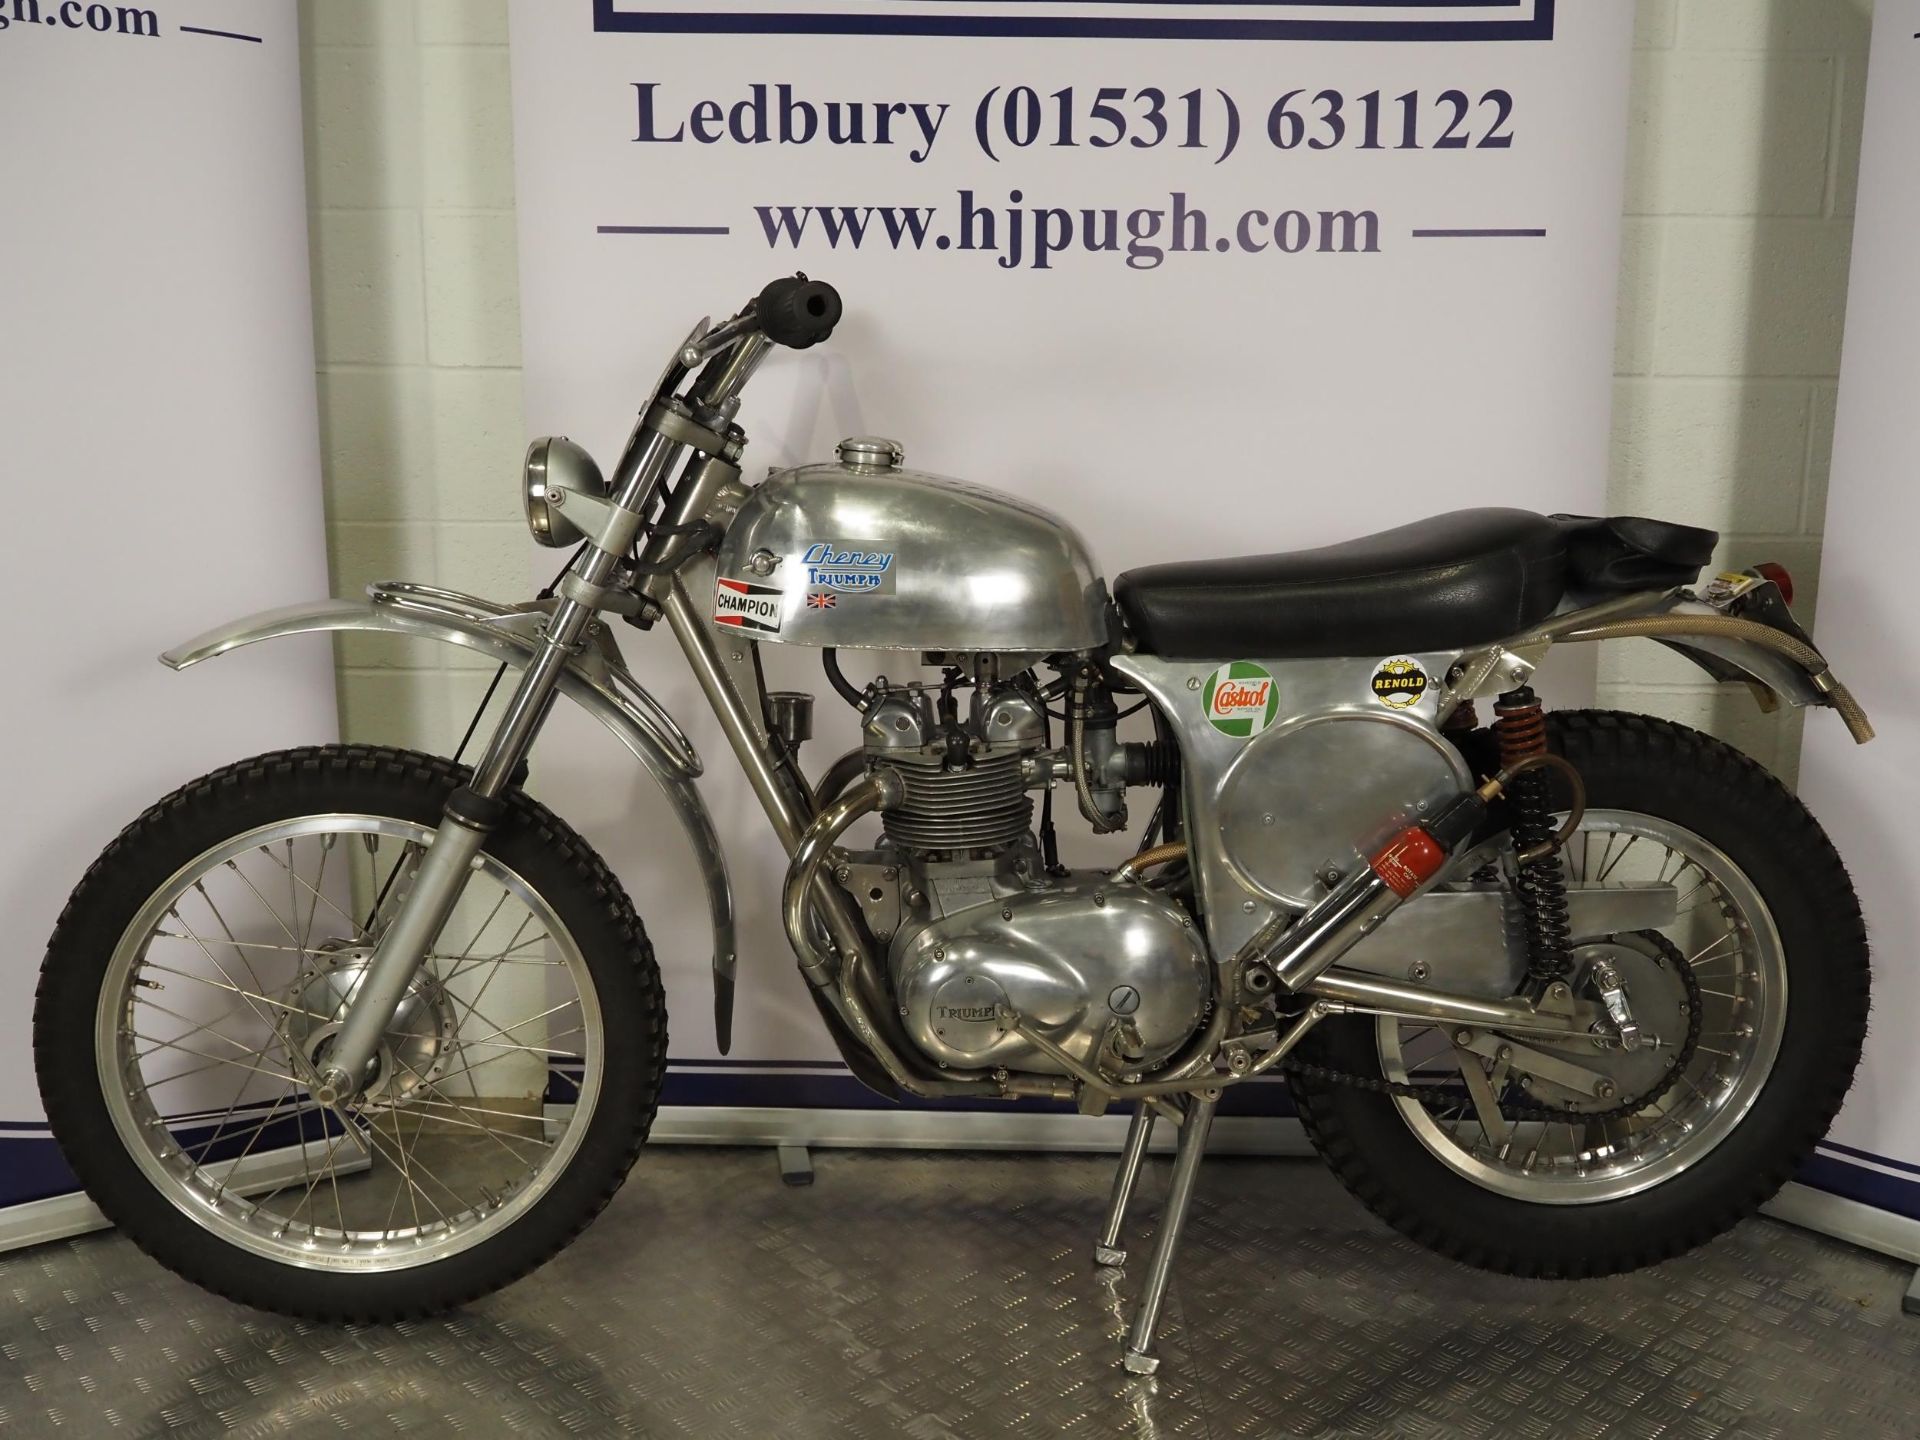 Cheney Triumph trials bike. 1970. 500cc Frame No-T109EC3679 Engine No. T100FC03679 Runs and rides, - Image 7 of 7